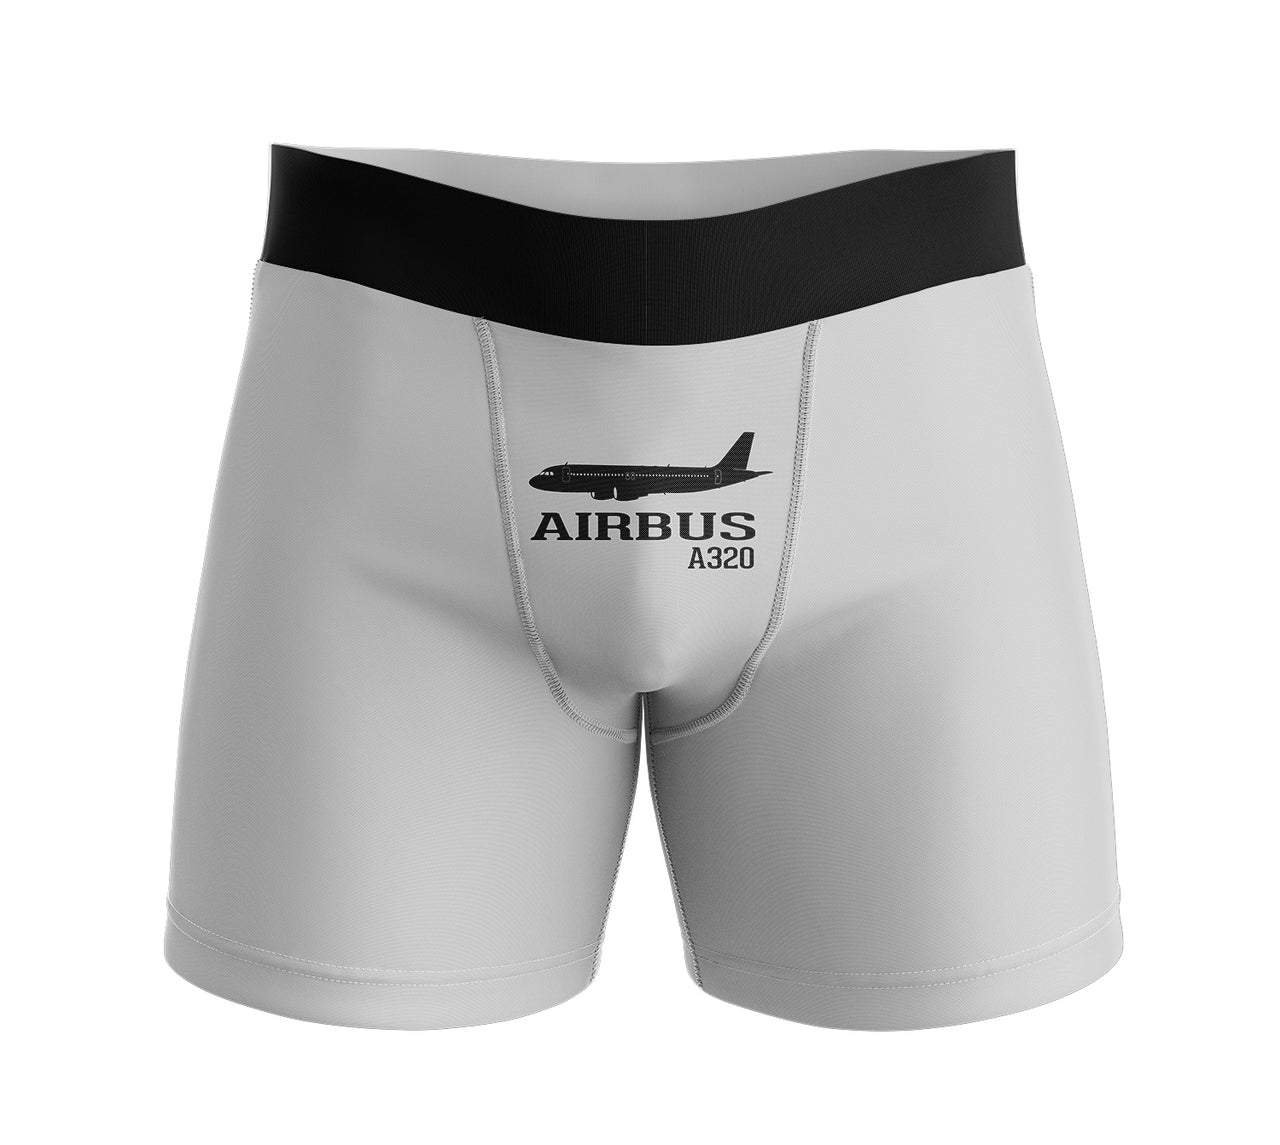 Airbus A320 Printed Designed Men Boxers